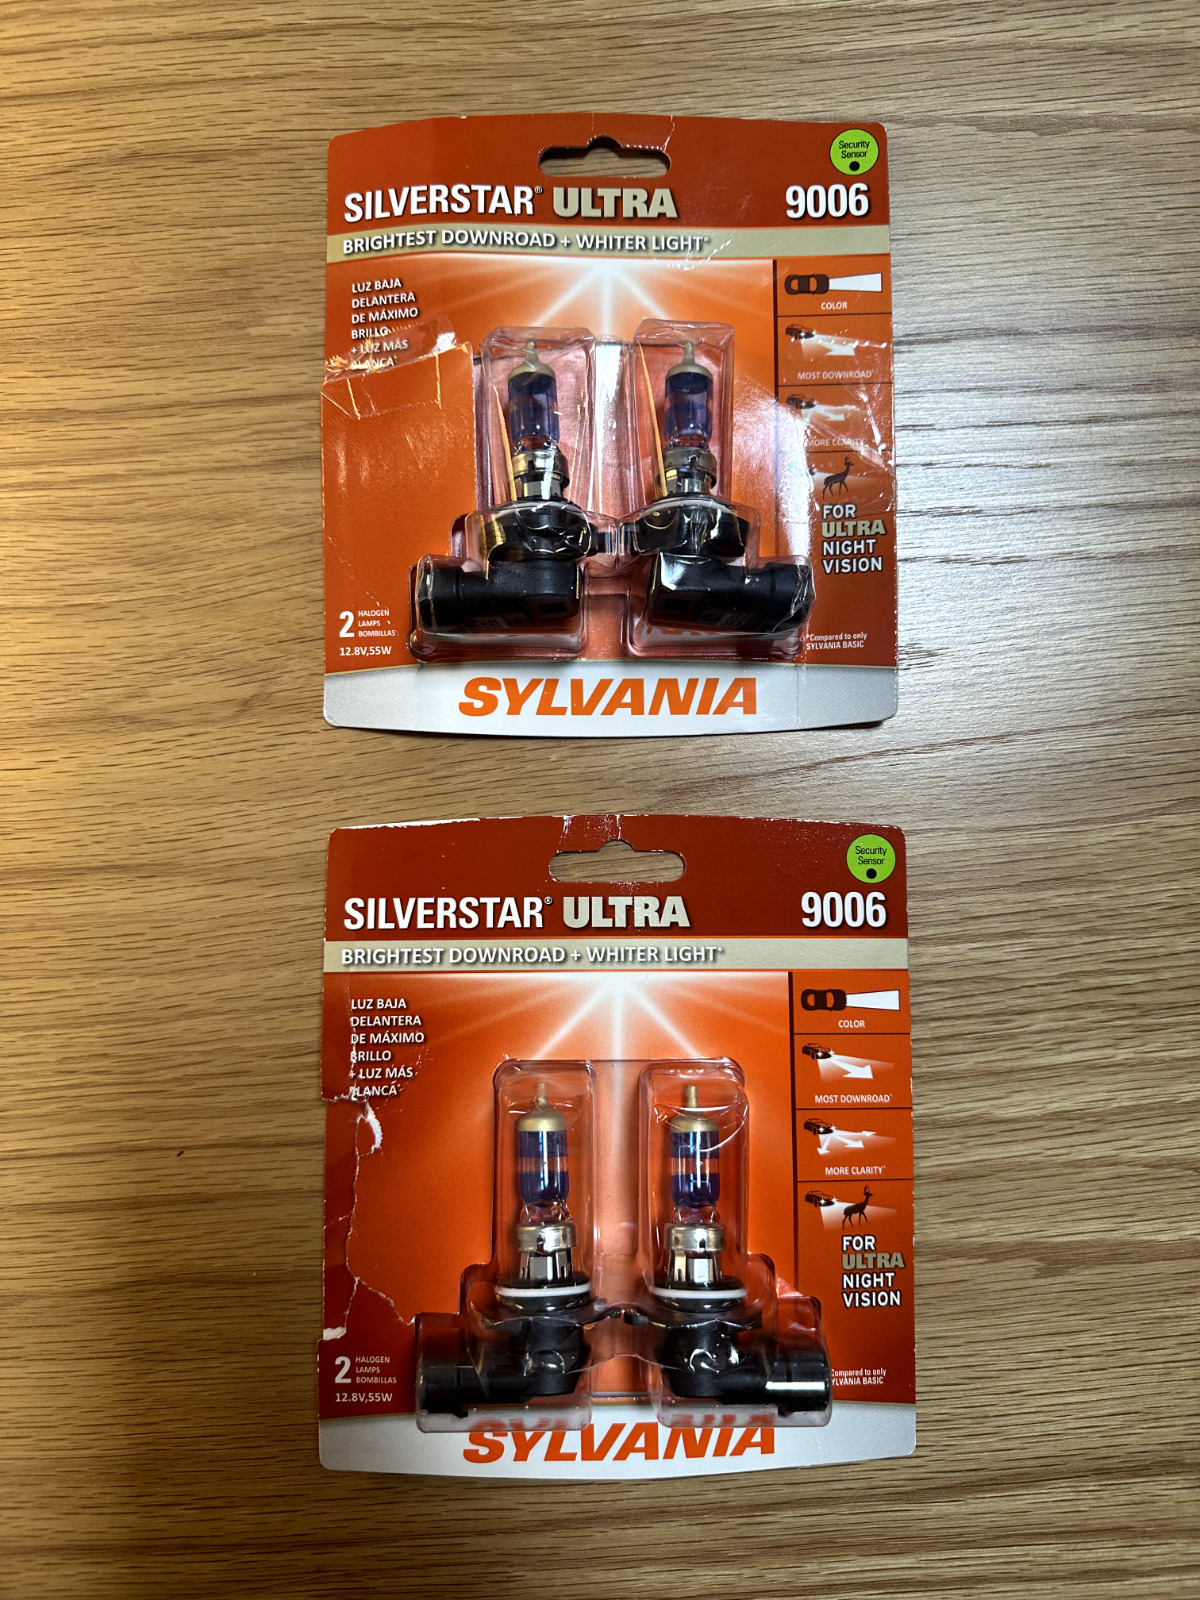 Sylvania Silverstar ULTRA 9006 Headlight Bulbs—(2) Pairs, (4) Bulbs